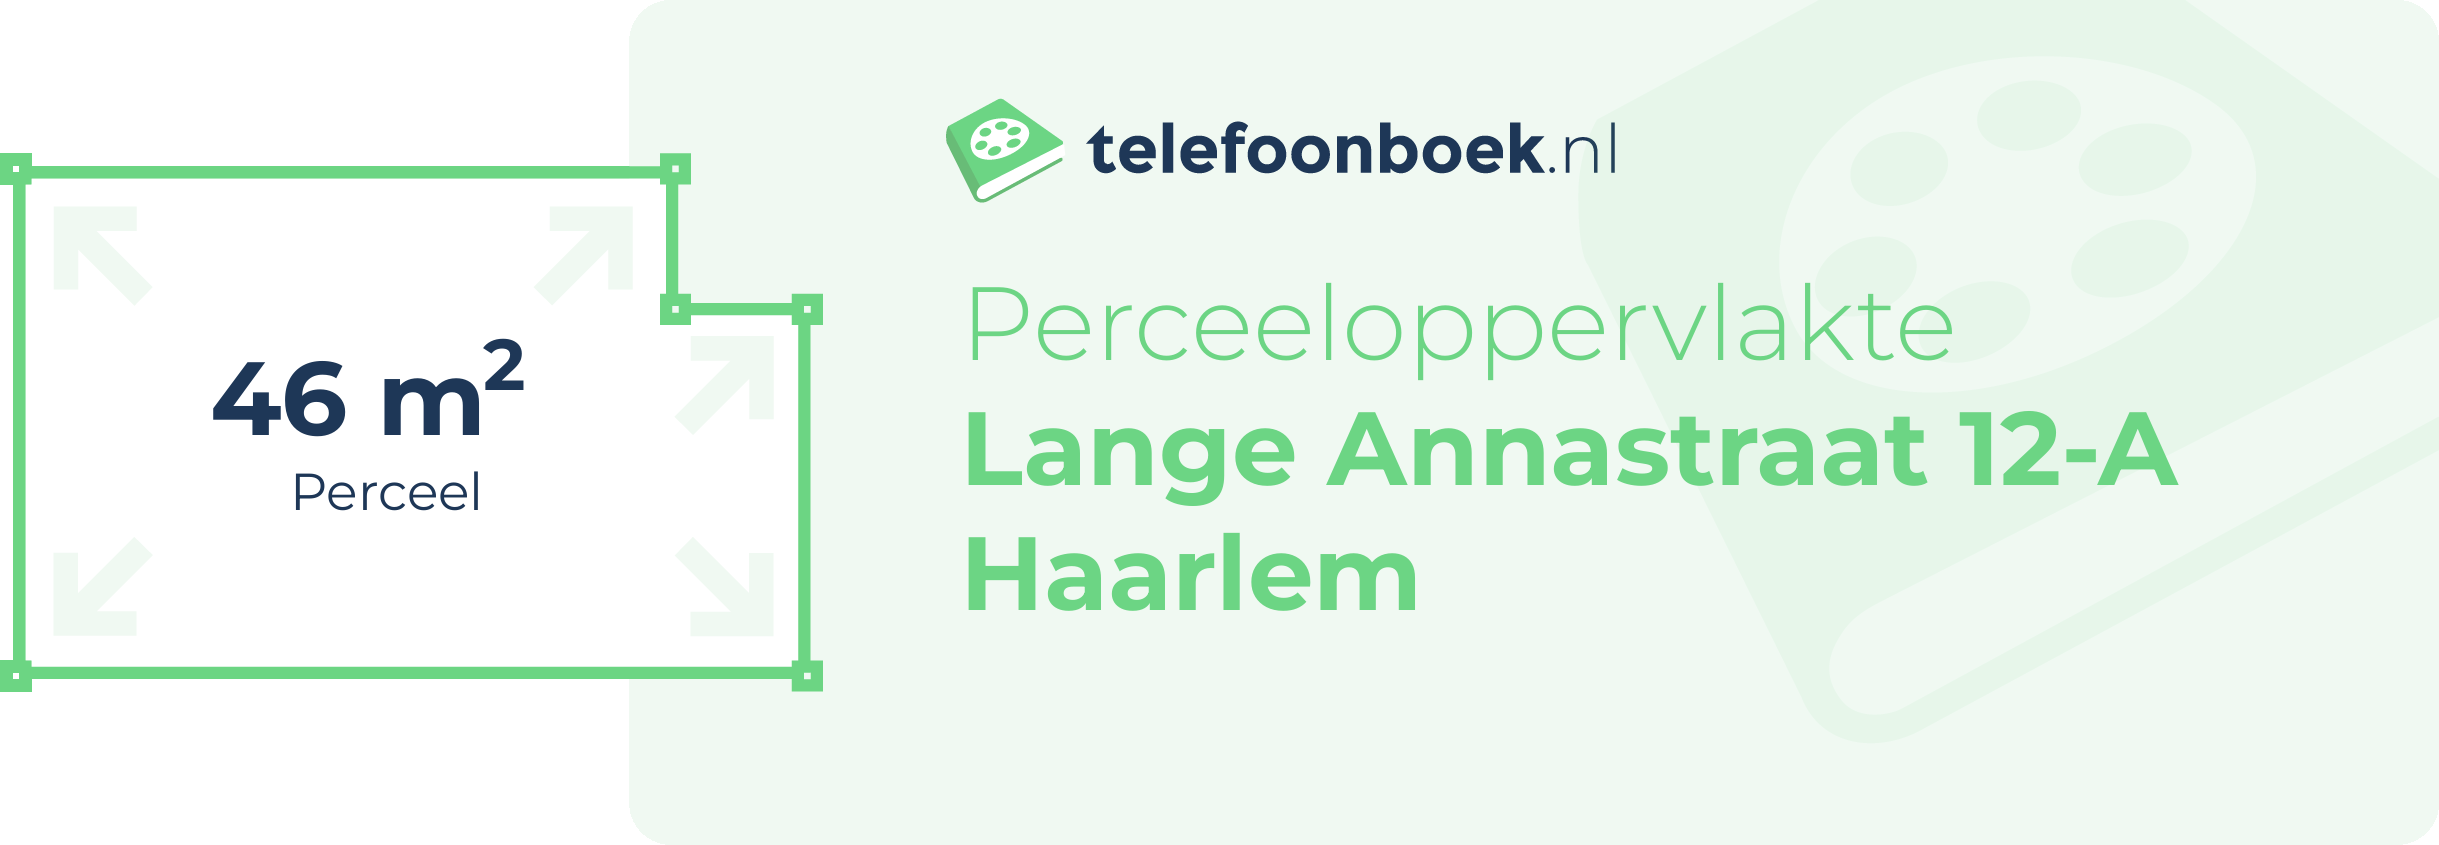 Perceeloppervlakte Lange Annastraat 12-A Haarlem